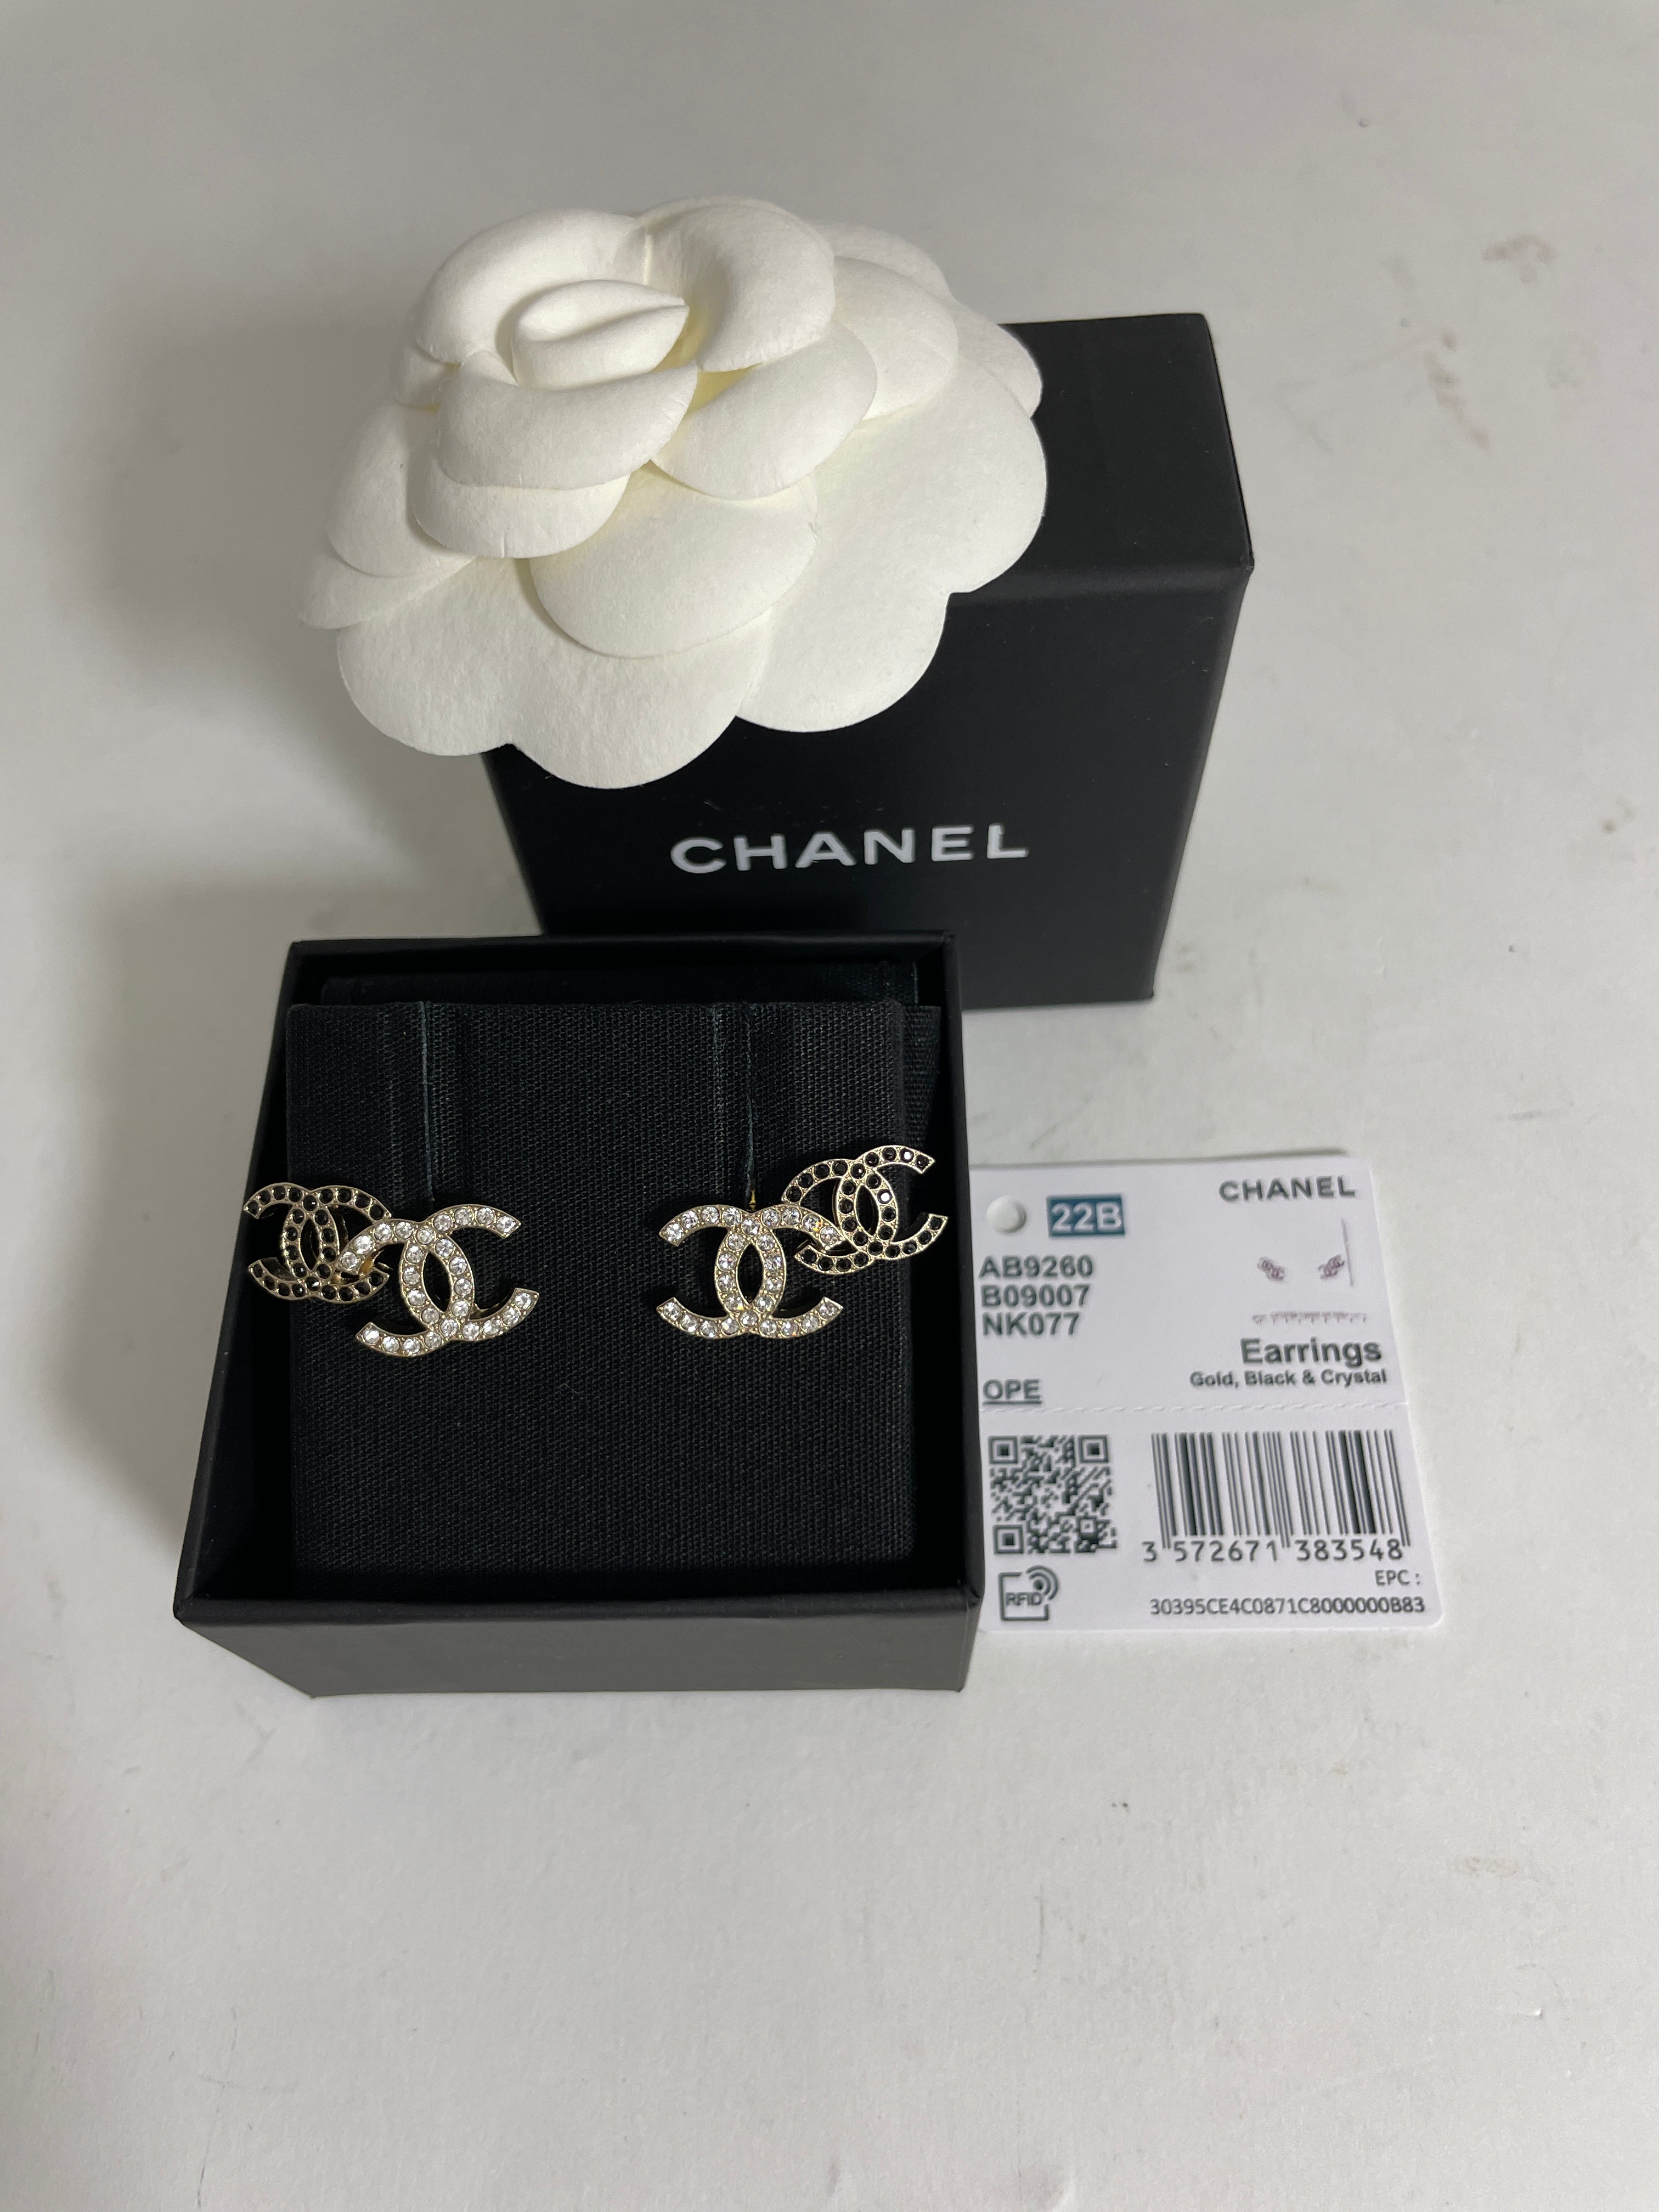 Chanel Earrings Pearl Drop CC Studs in Gold, New in Box GA001 - Julia Rose  Boston